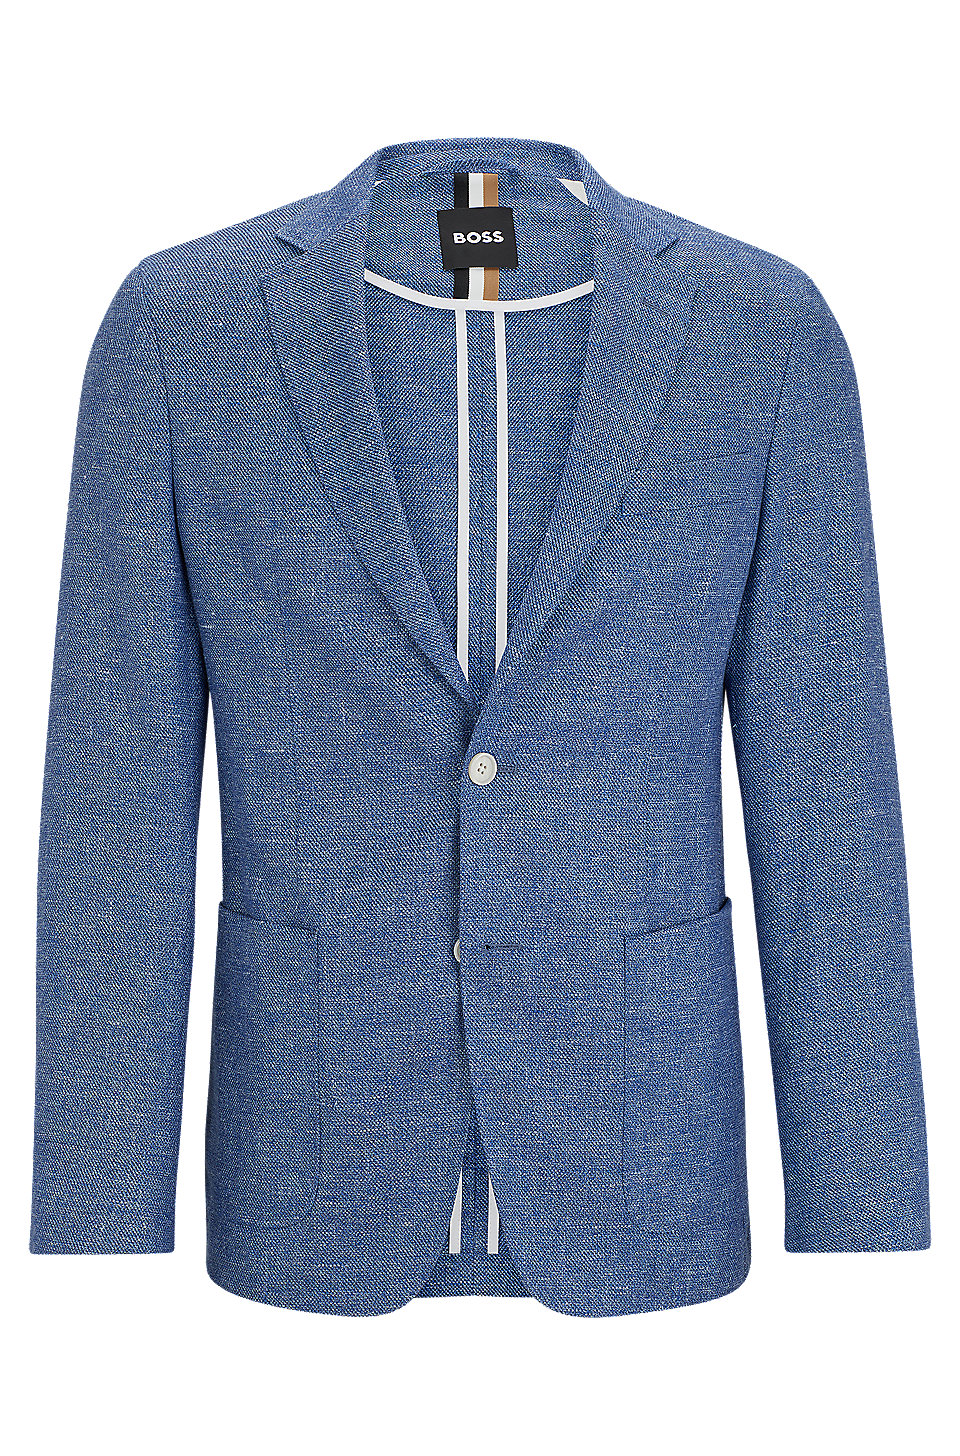 BOSS - Slim-fit jacket in a micro-patterned linen blend